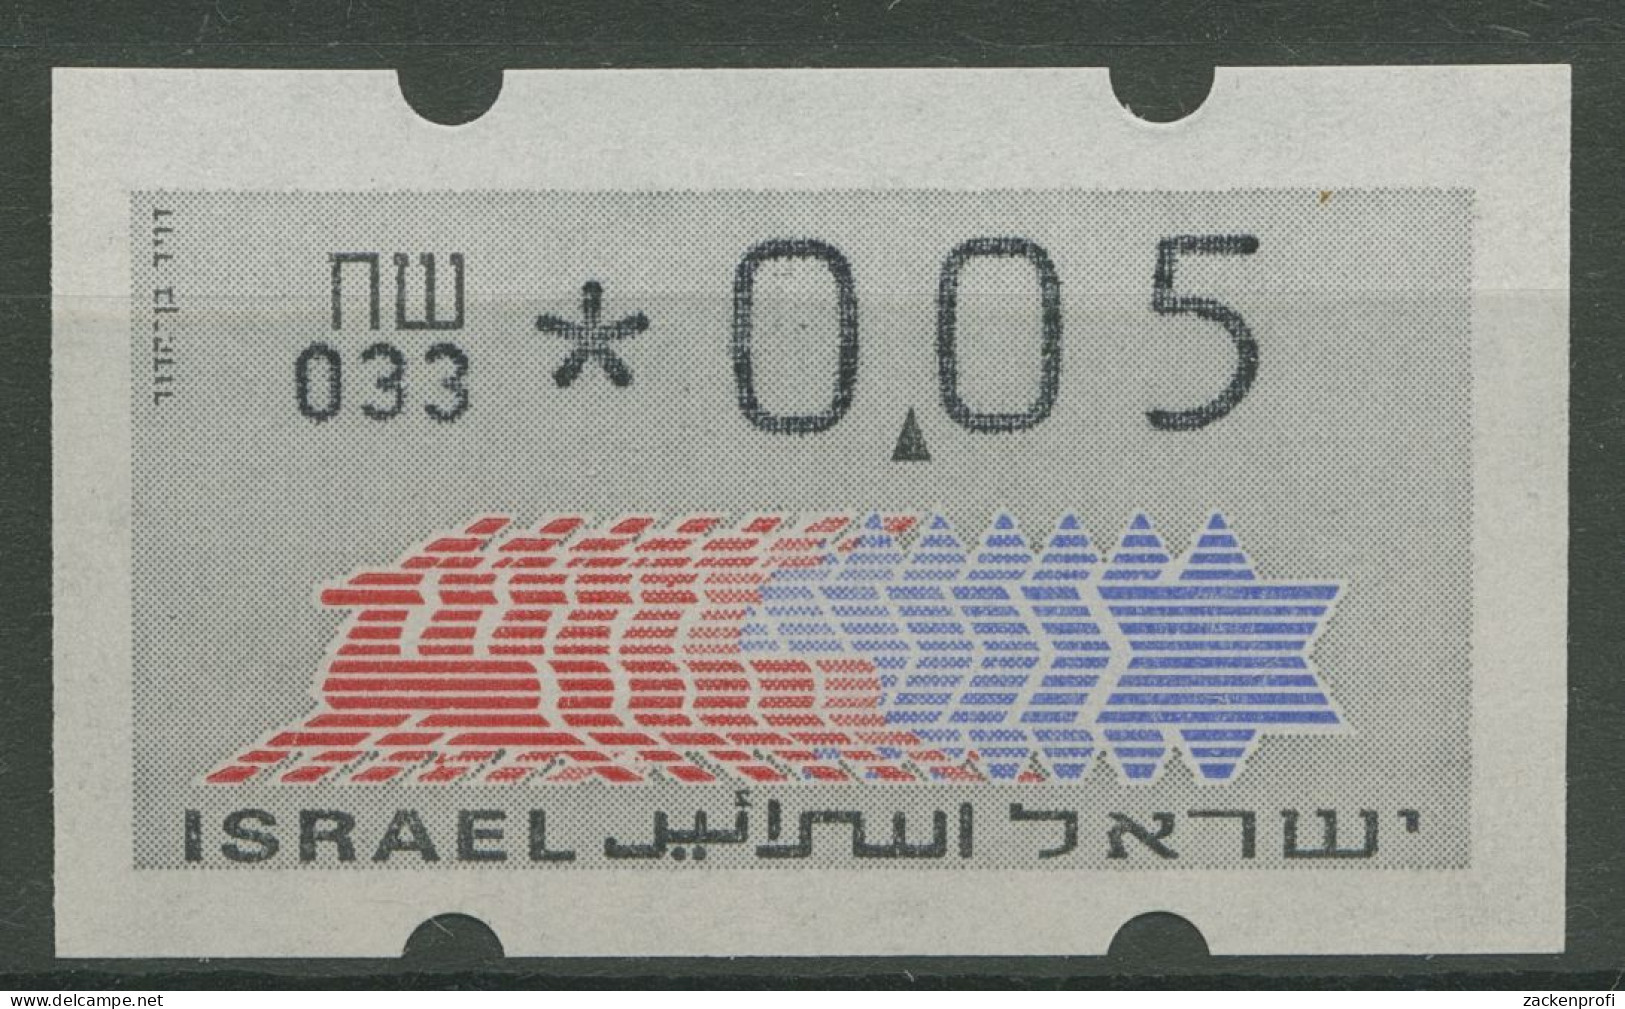 Israel ATM 1990 Hirsch Automat 033 Einzelwert ATM 3.3.33 Postfrisch - Franking Labels